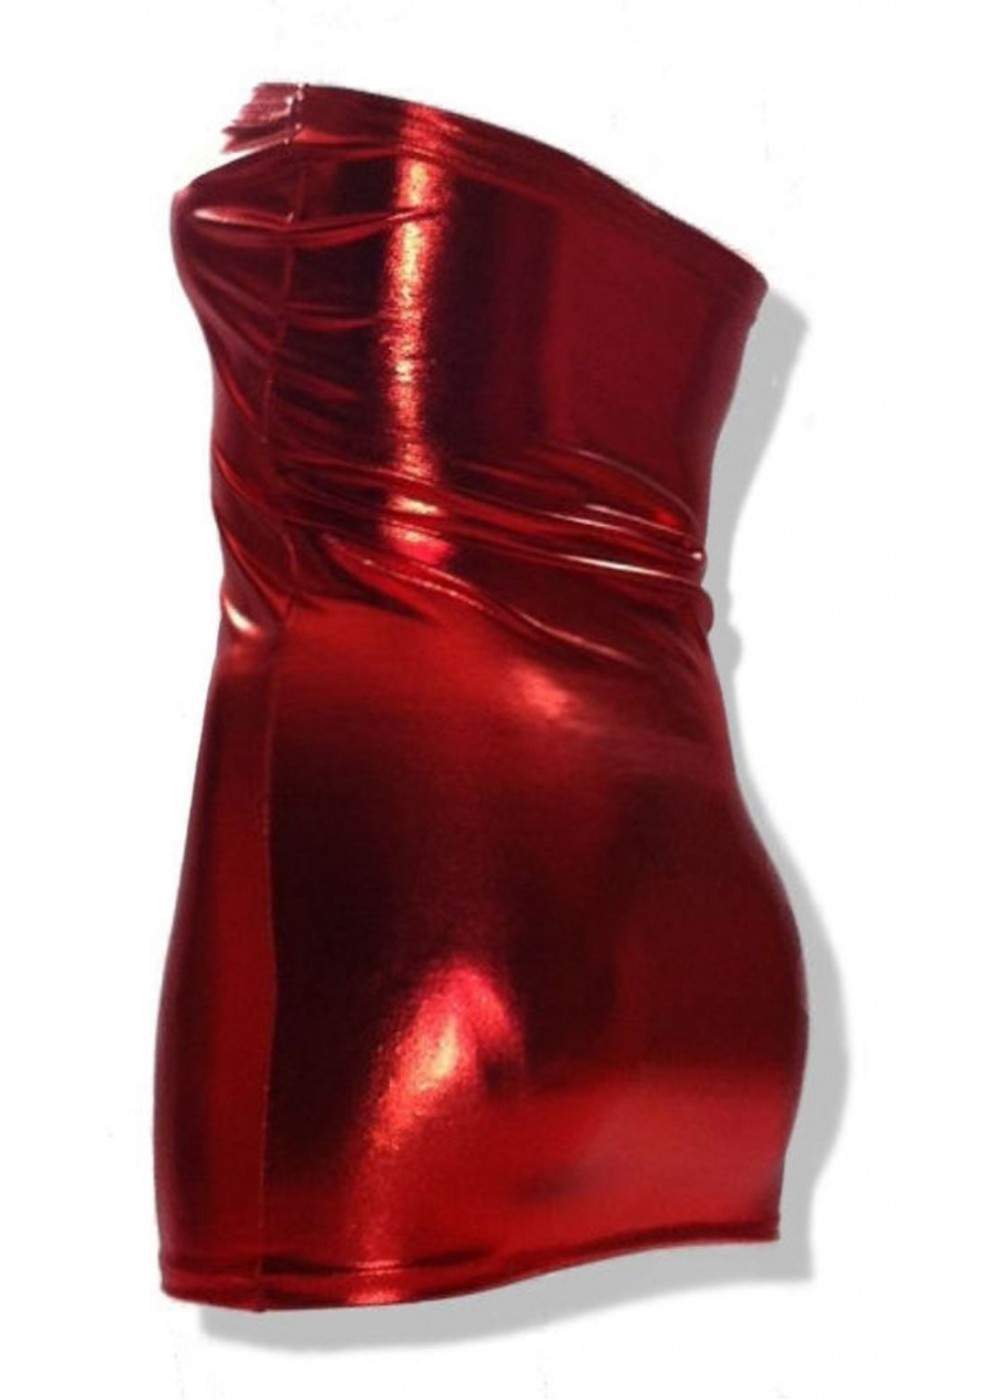 Leather Optics Hammer Big Size Bandeau Dress Red - Rabatt